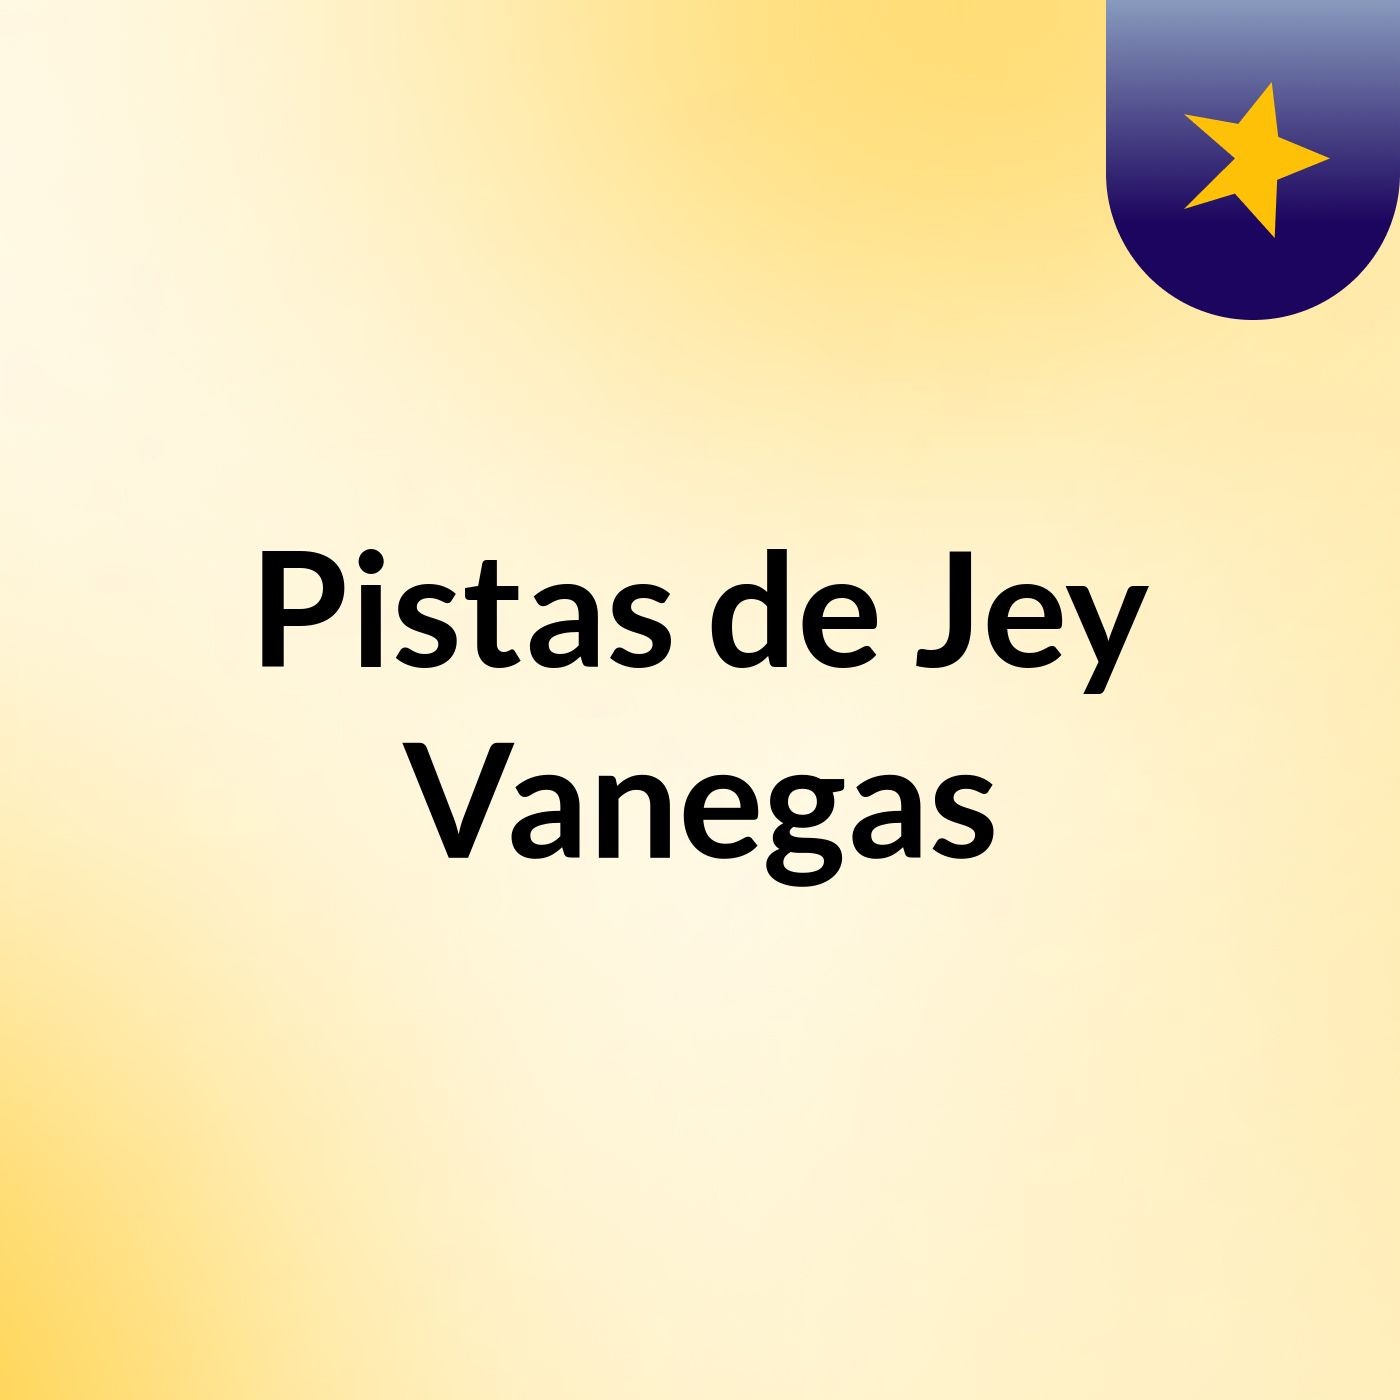 Pistas de Jey Vanegas